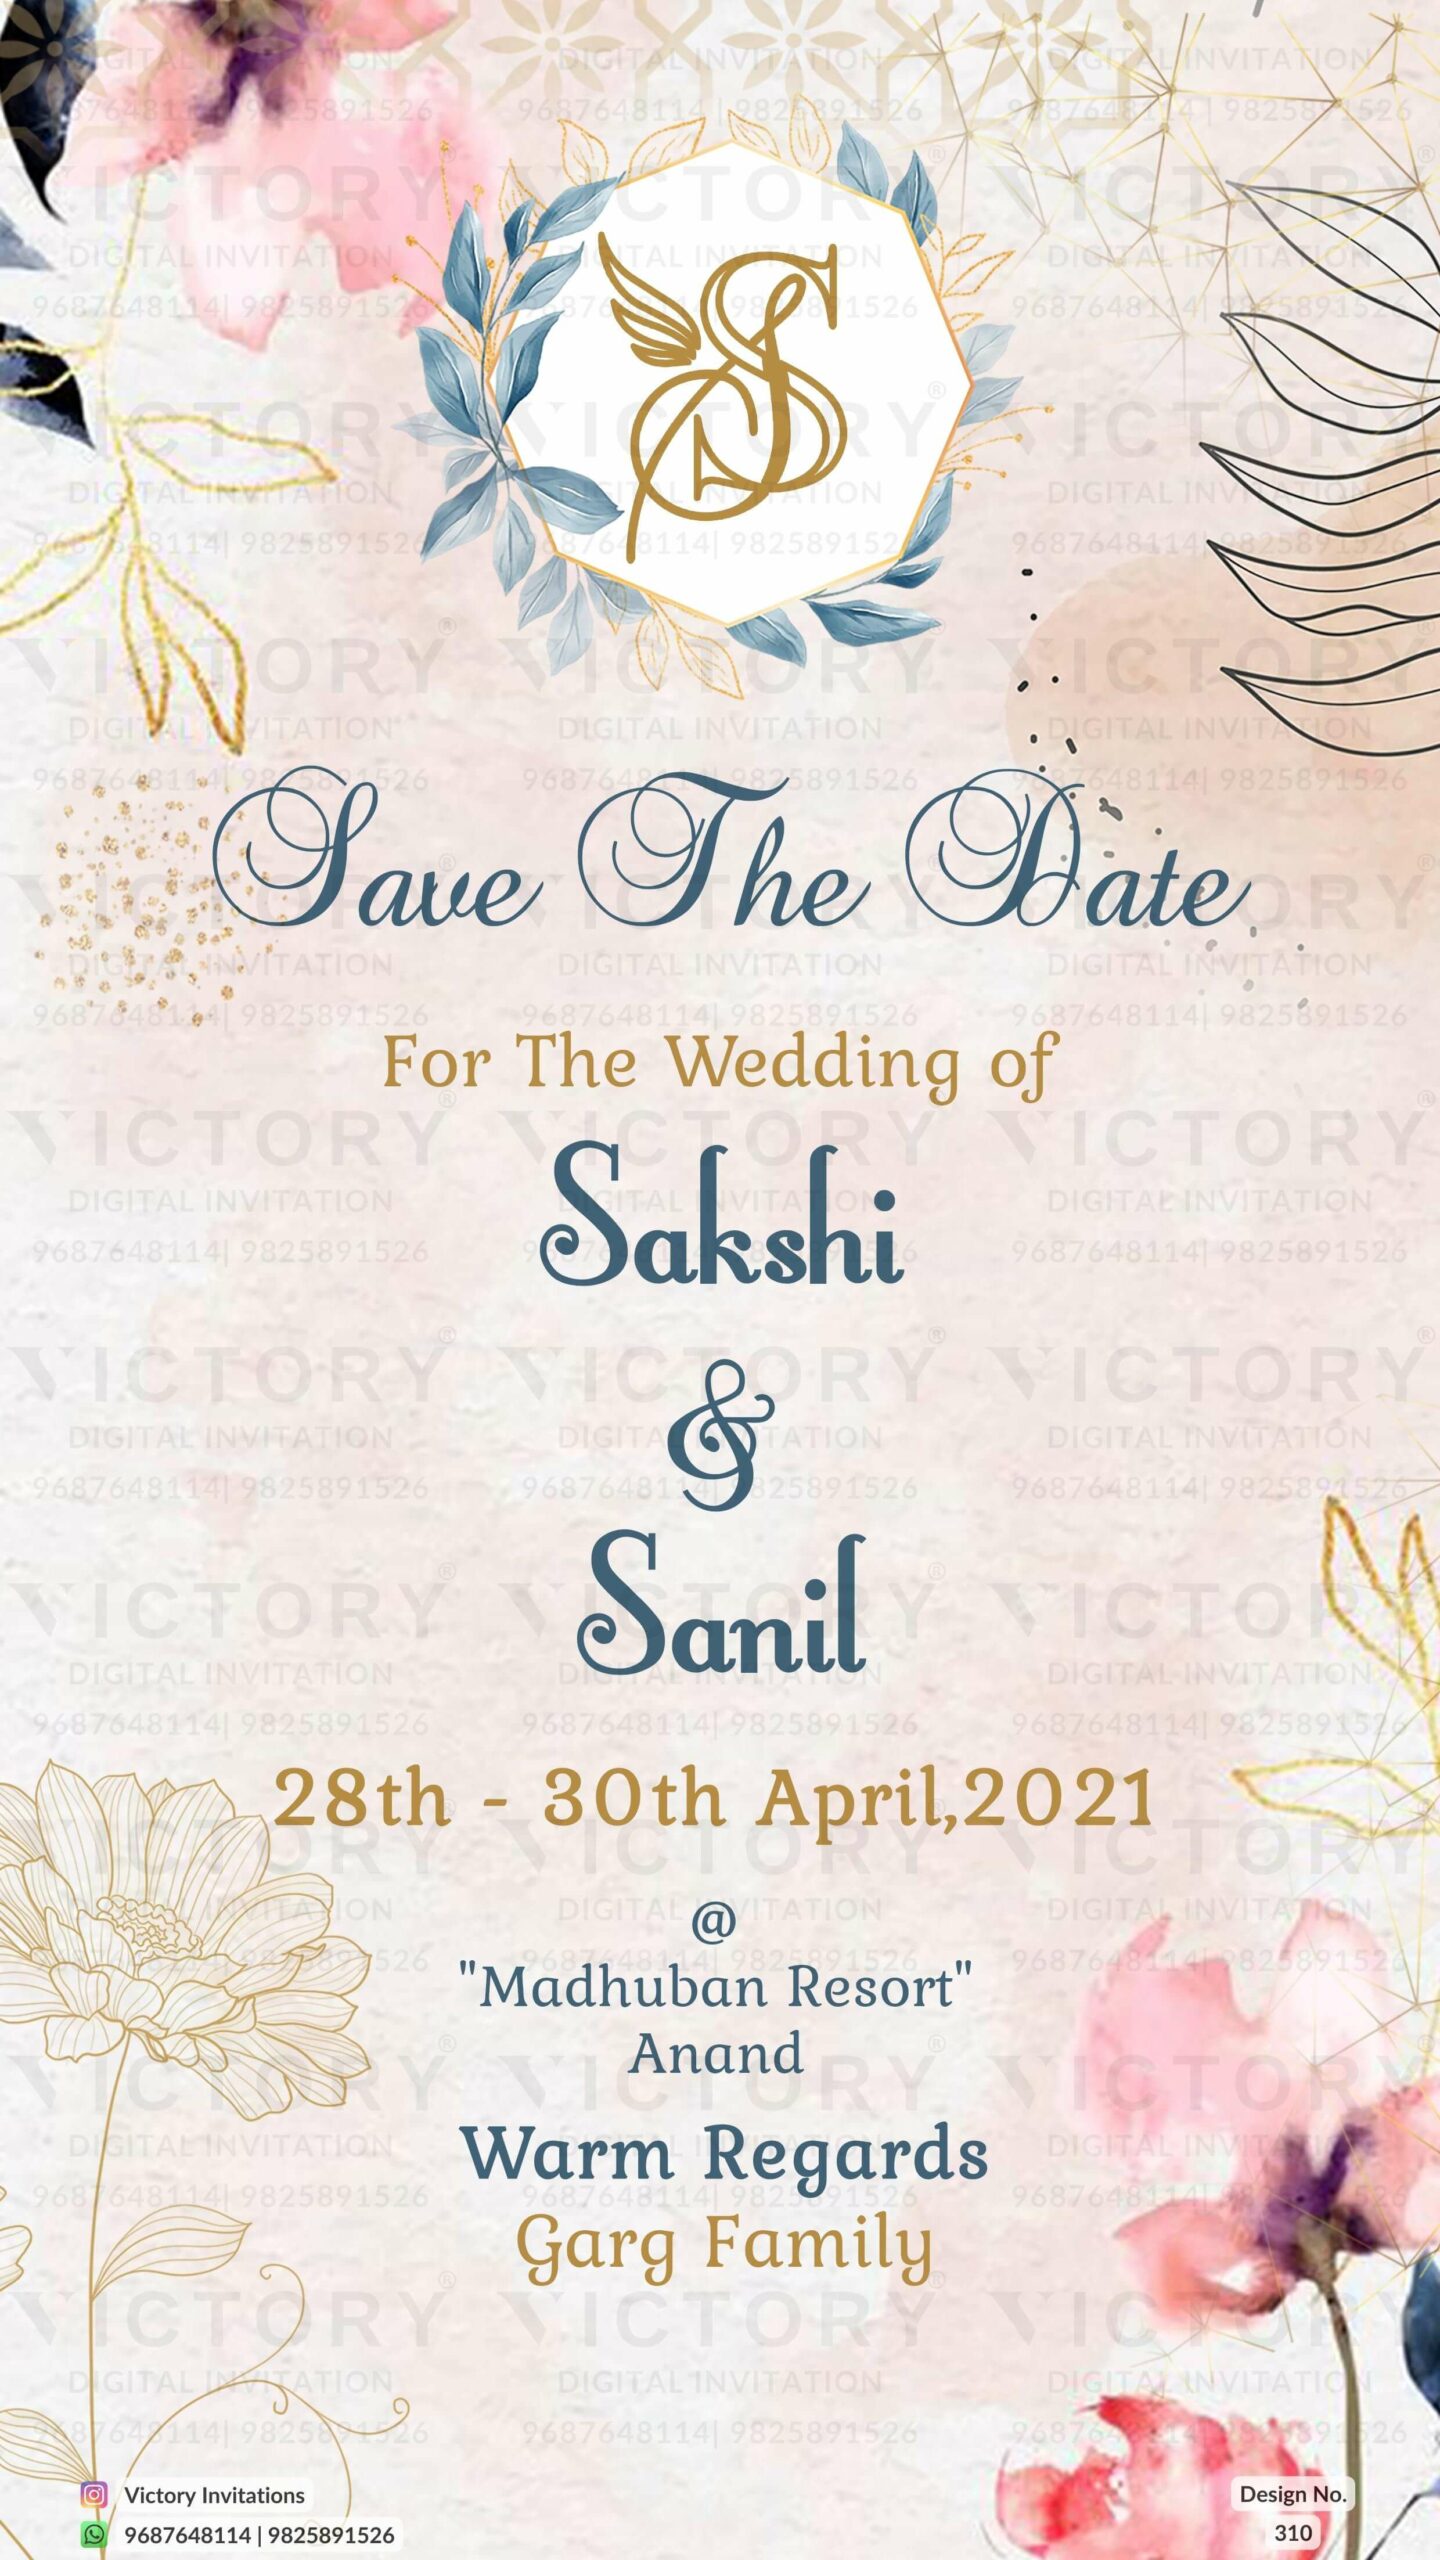 Save the Date digital invitation card design no.310